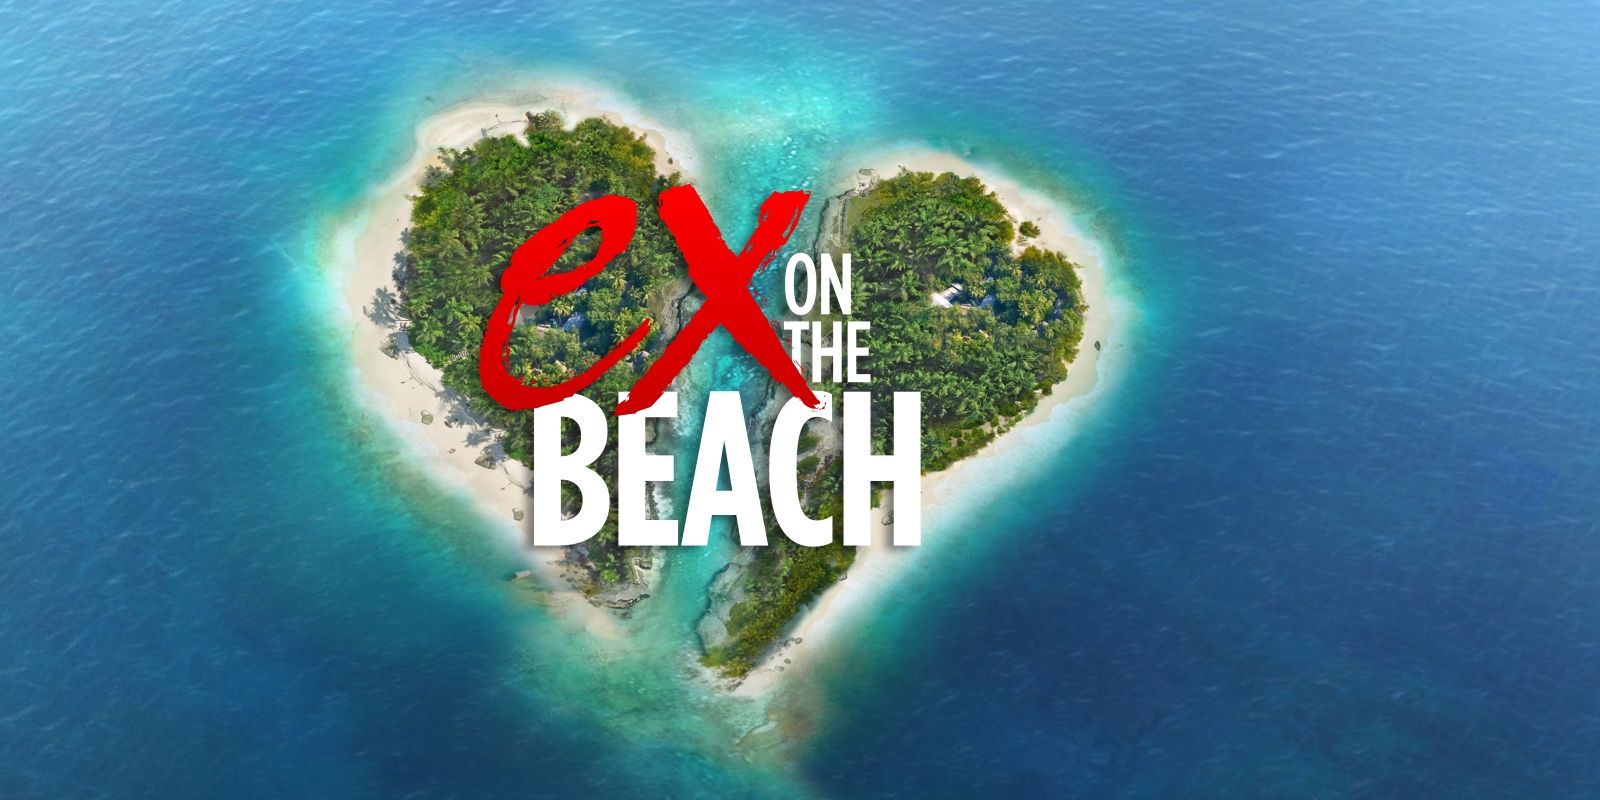 Ex On The Beach Logo Over A Heart Shaped Island